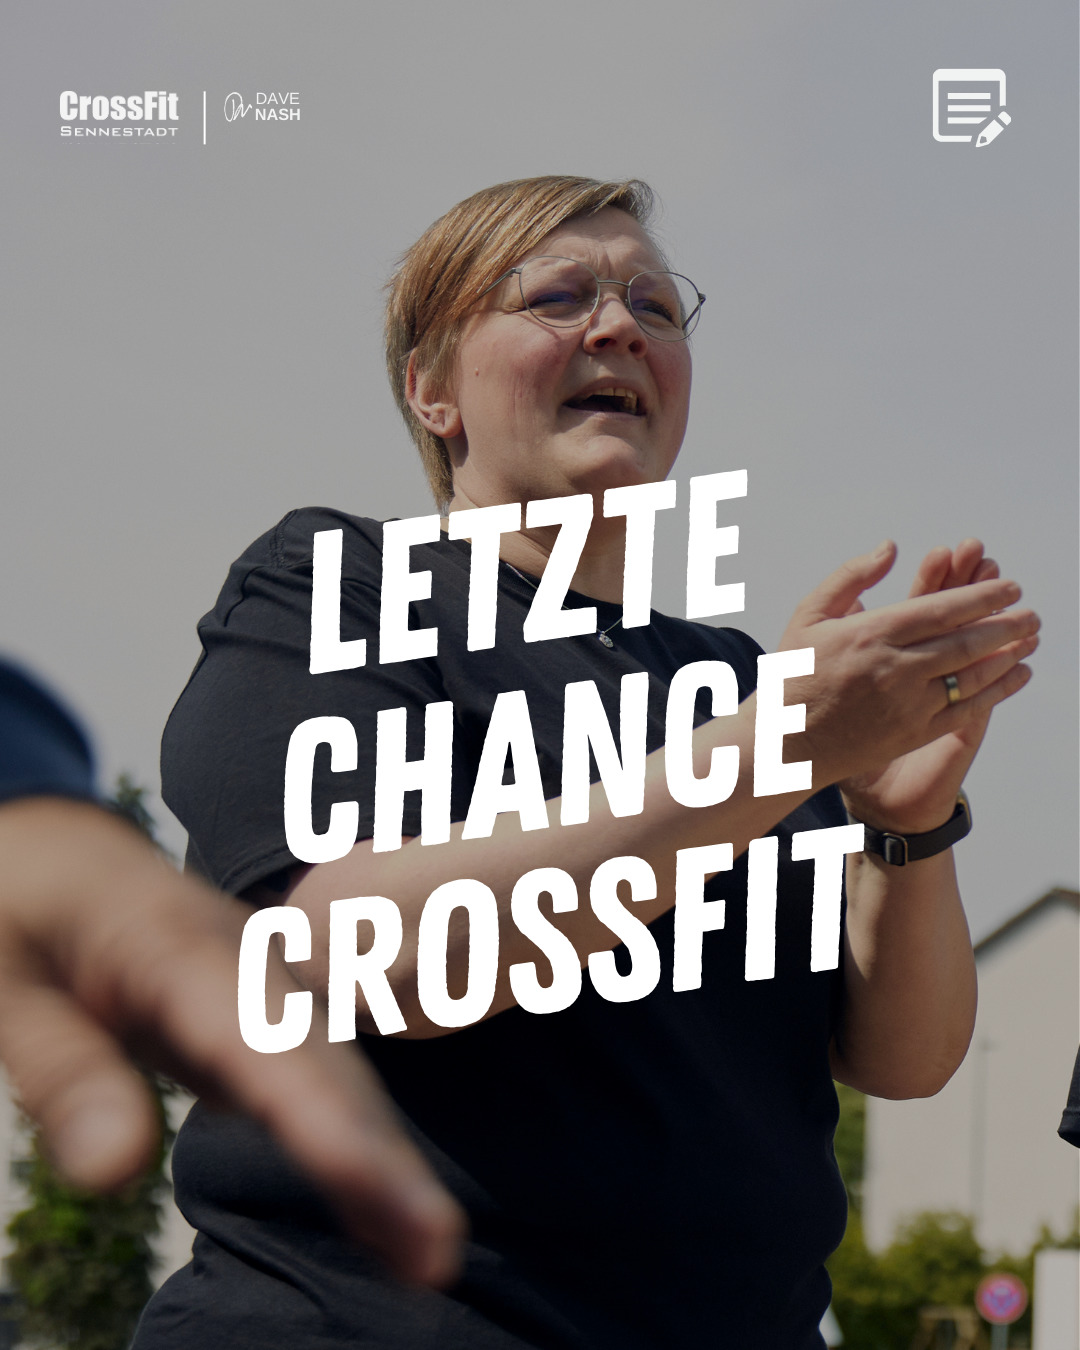 CrossFit verändert Leben